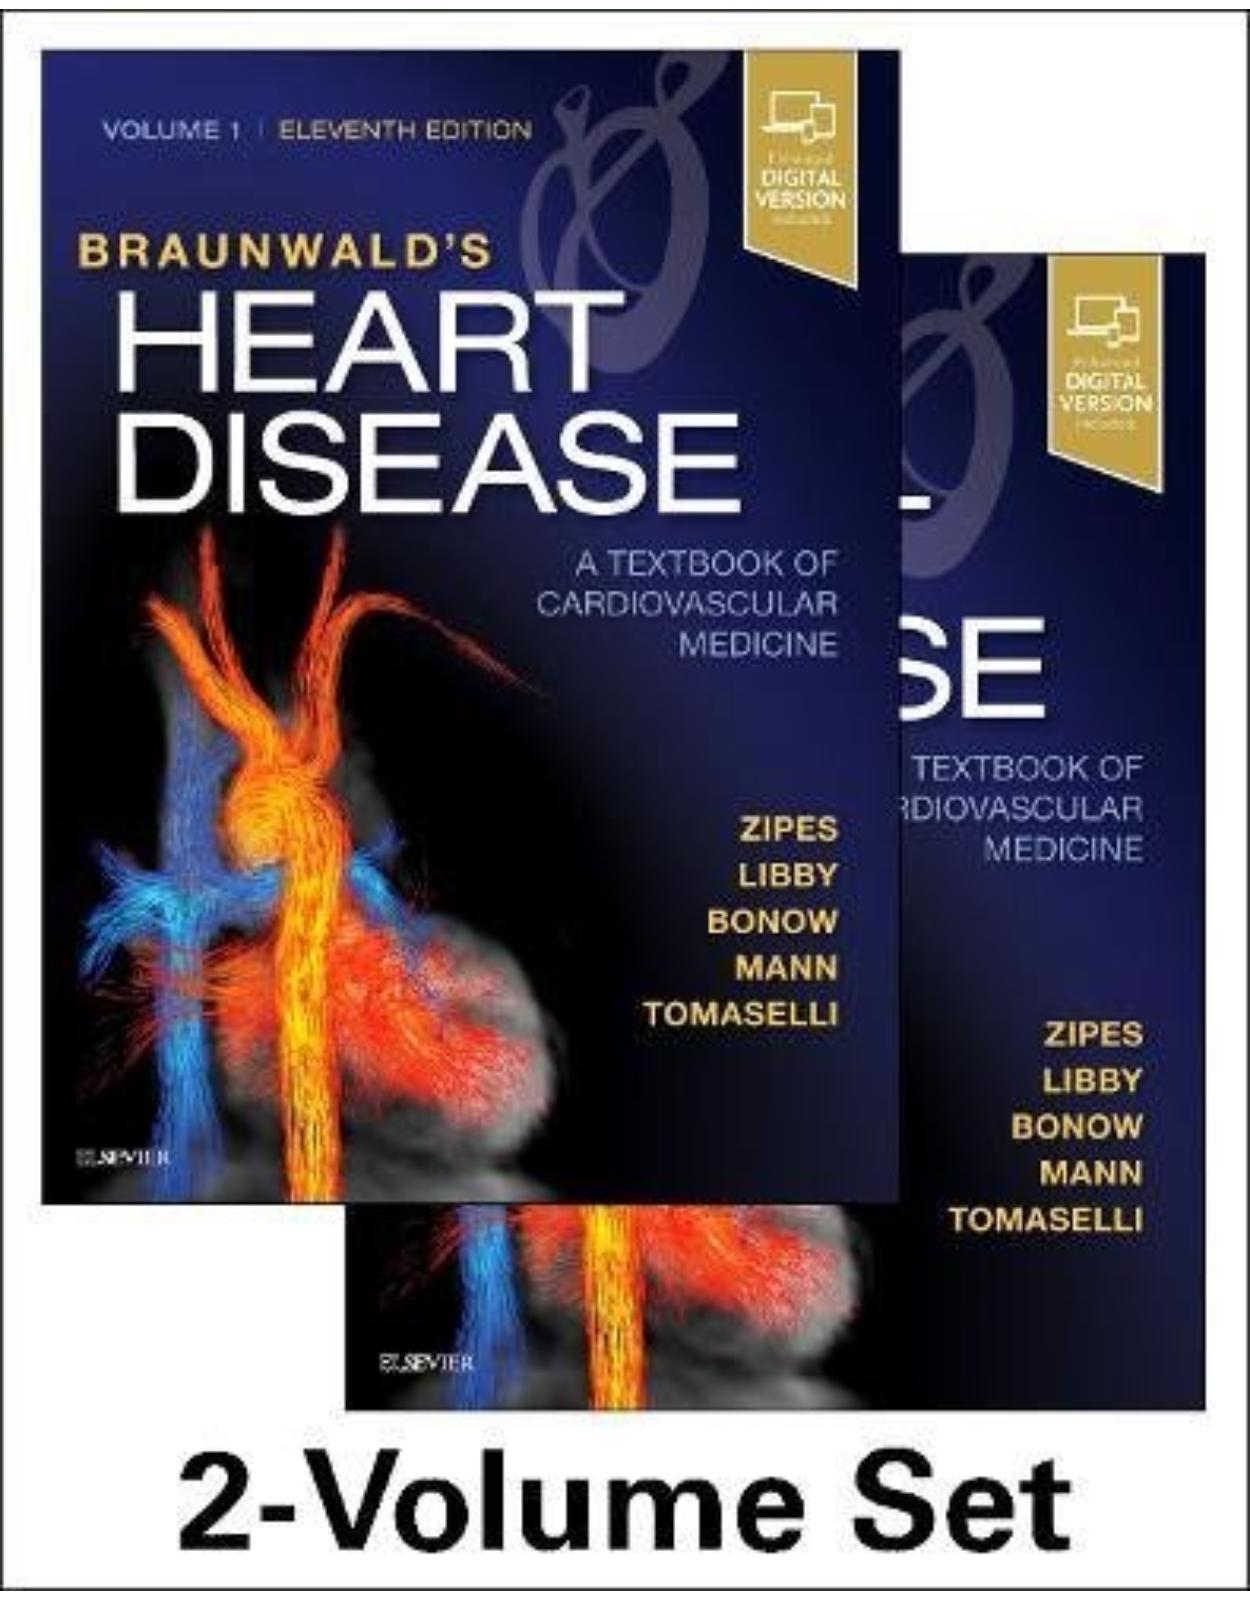 Braunwald s Heart Disease: A Textbook of Cardiovascular Medicine, 2-Volume Set, 11th Edition